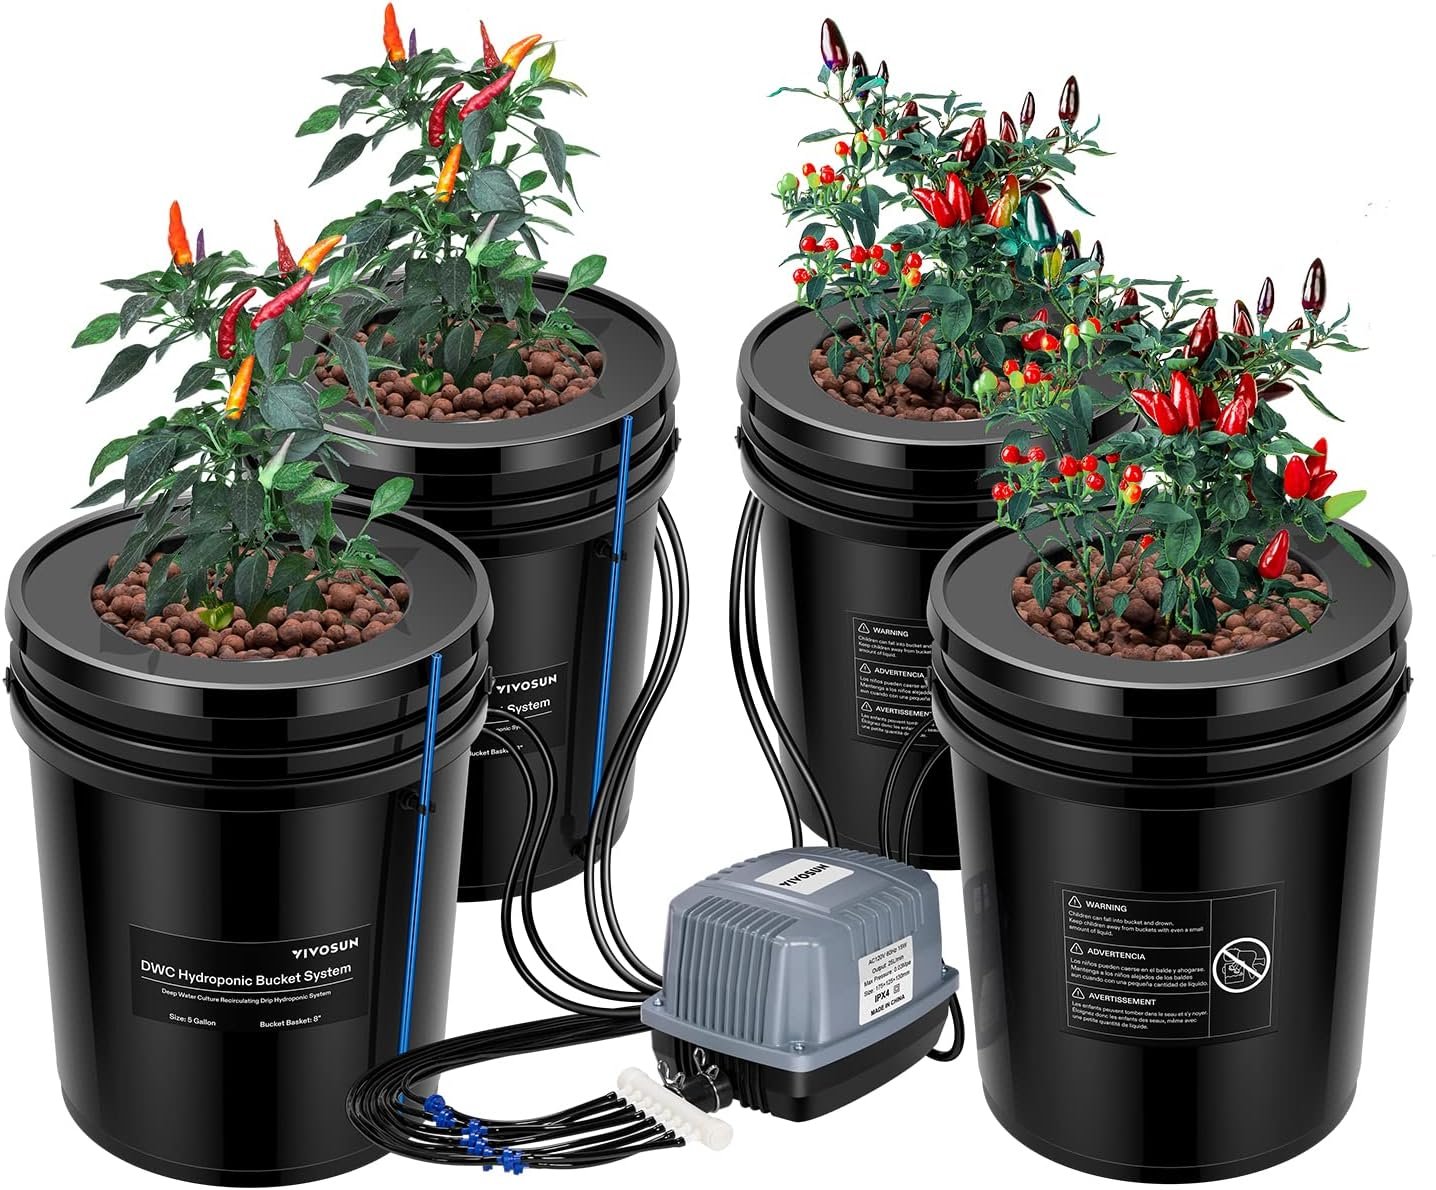 vivosun dwc hydroponics grow system review